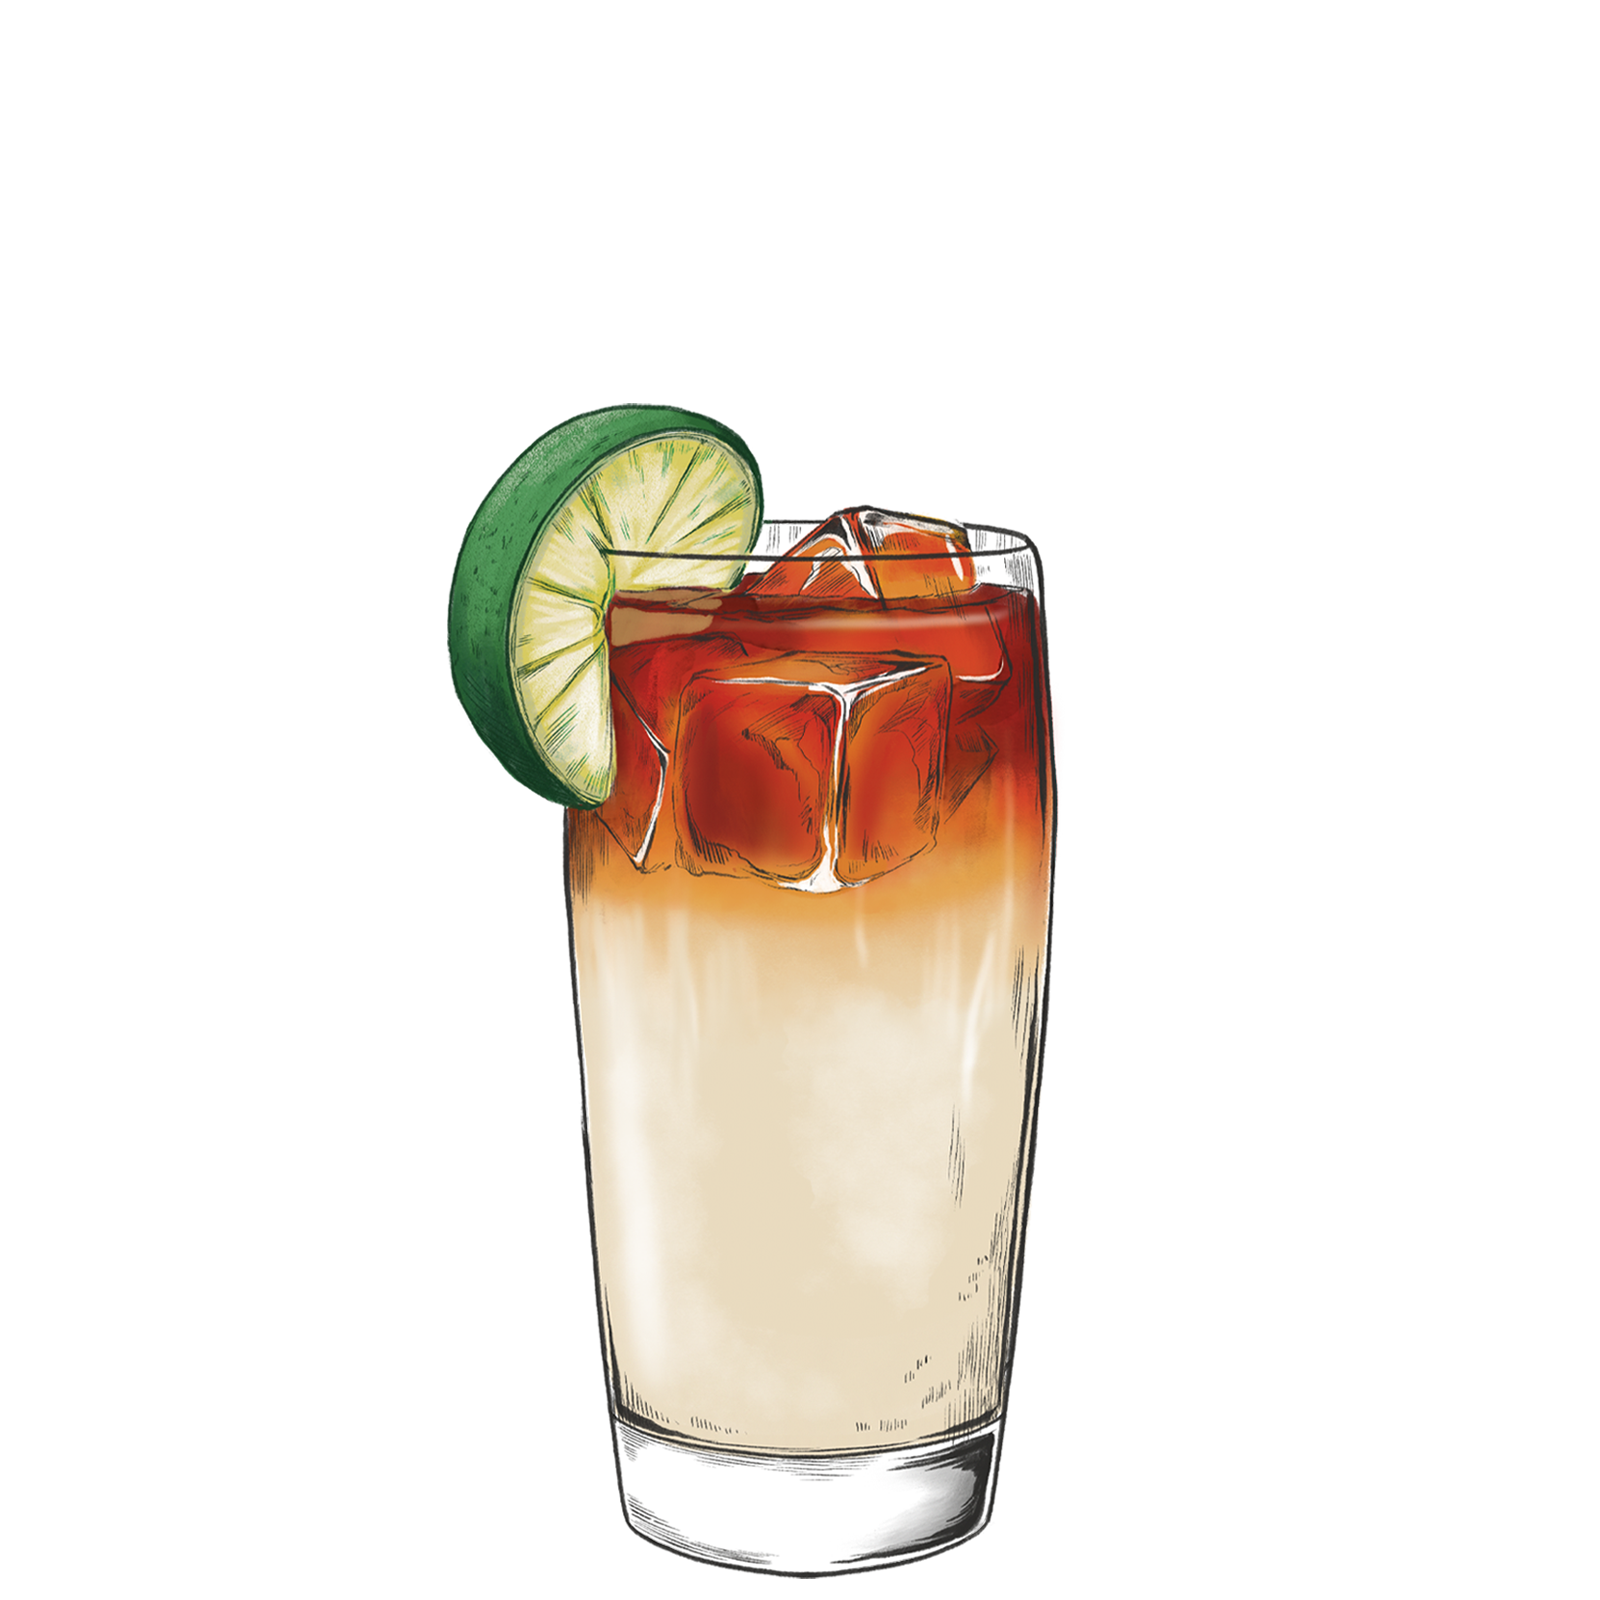 Cocktails PNG